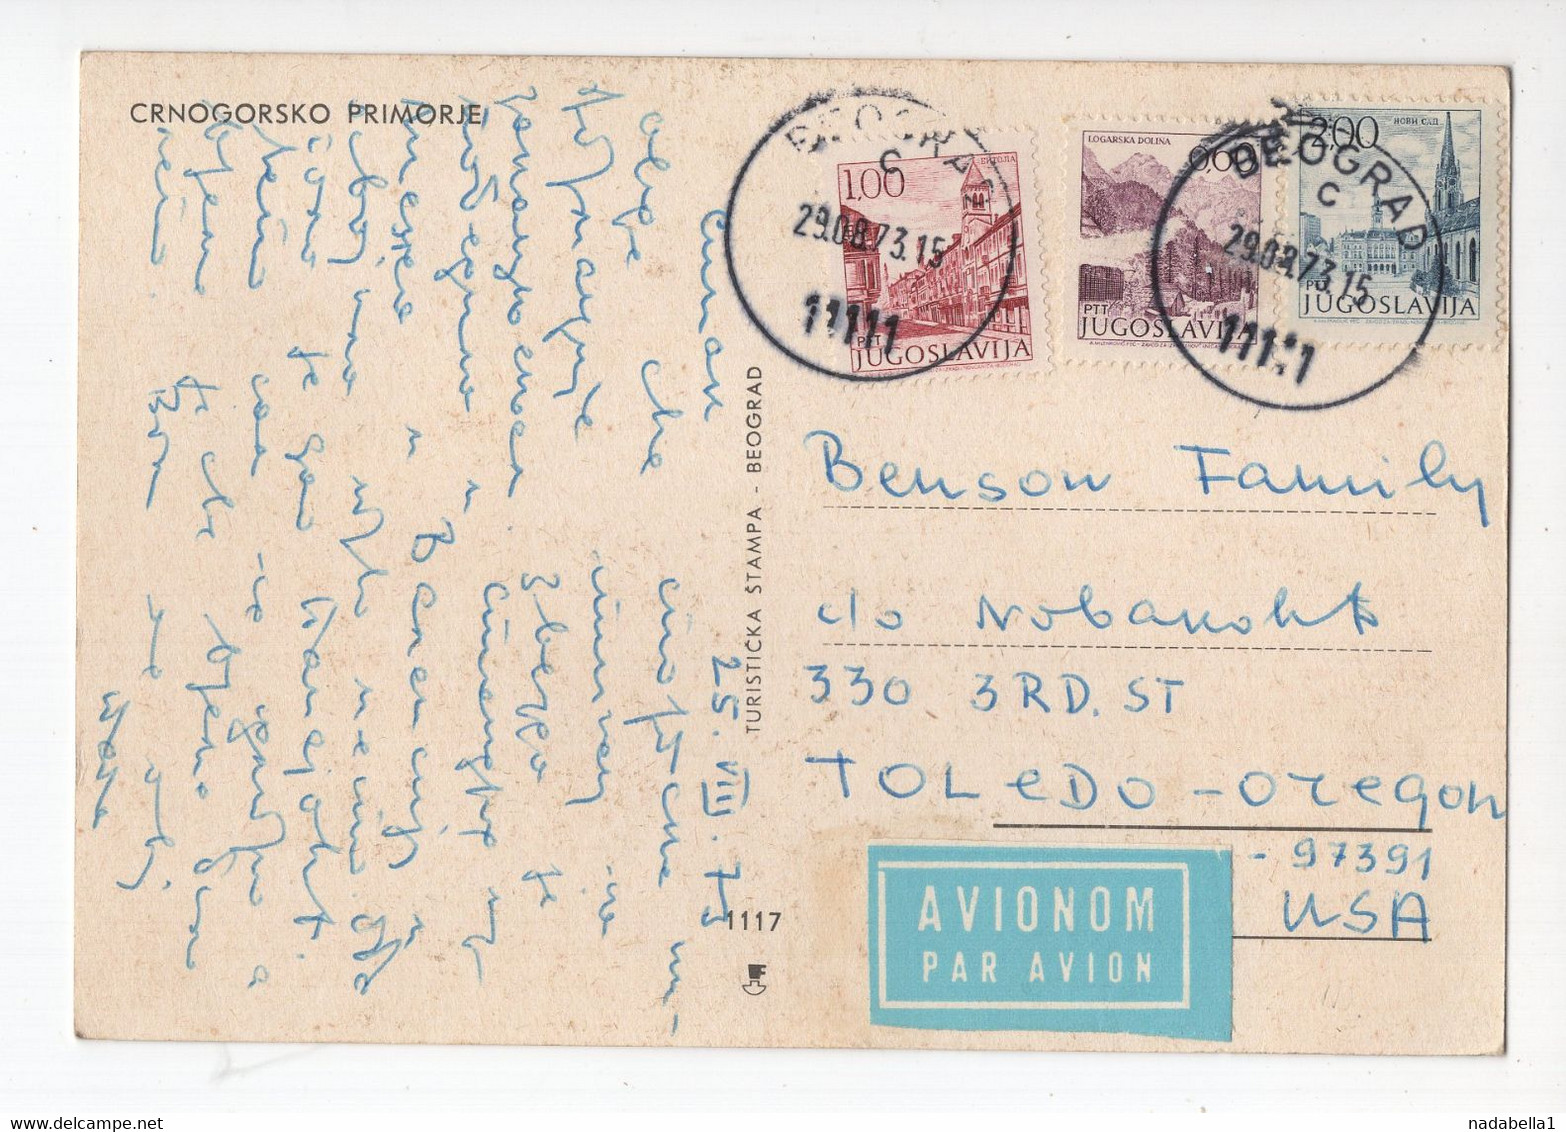 1973. YUGOSLAVIA,SERBIA,BELGRADE,AIRMAIL TO USA,MONTENEGRO MULTI VIEW POSTCARD,USED - Airmail